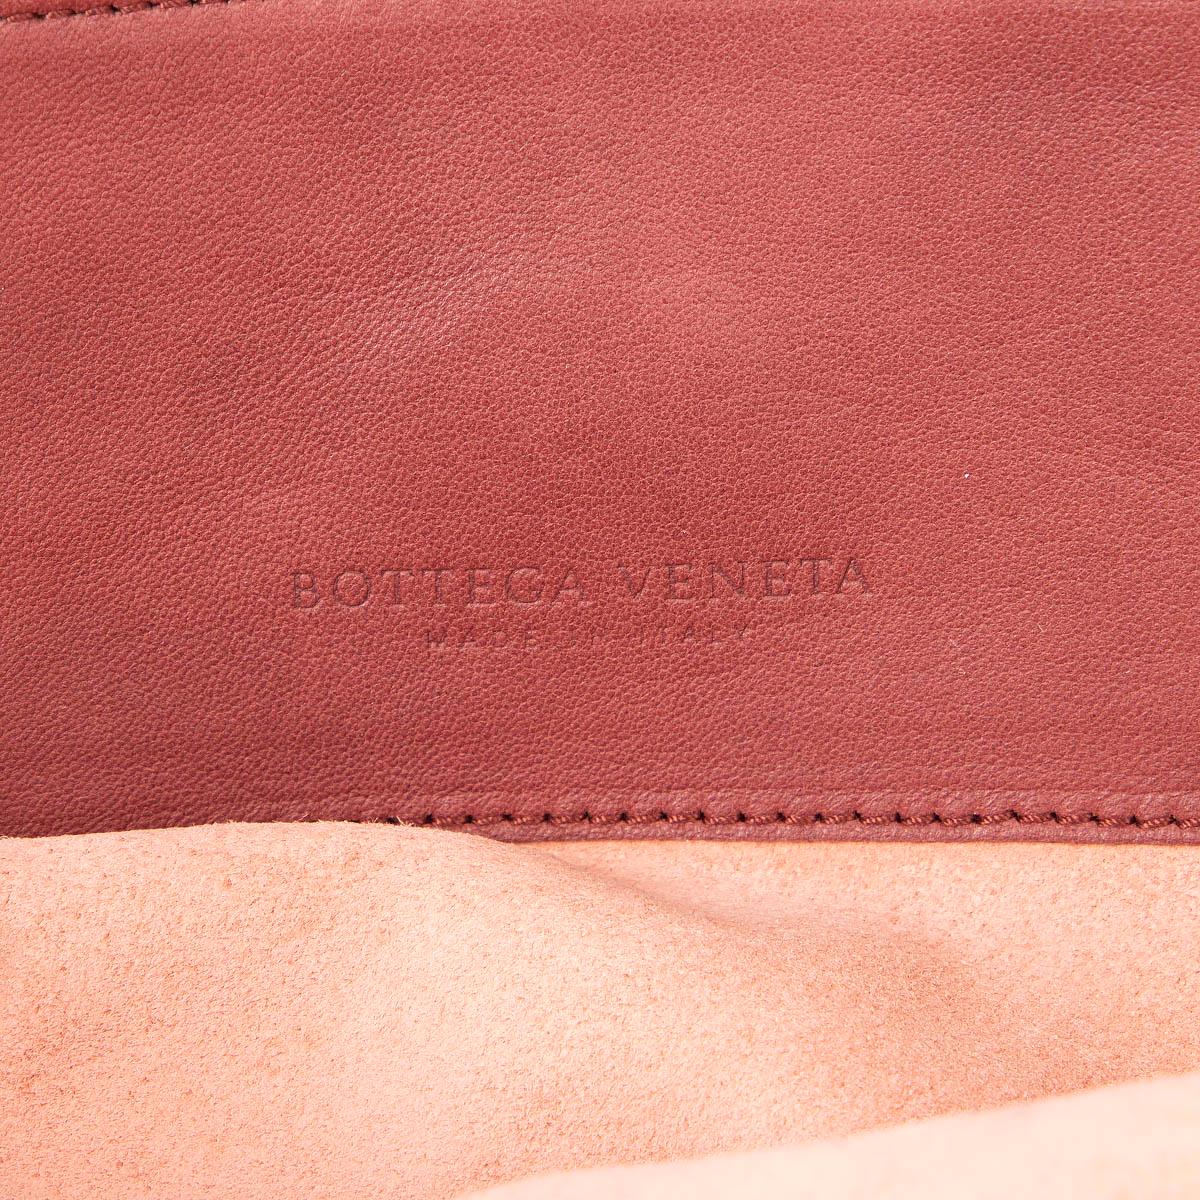 BOTTEGA VENETA burgundy Intrecciato leather ROMA MEDIUM TOTE Bag For Sale 1